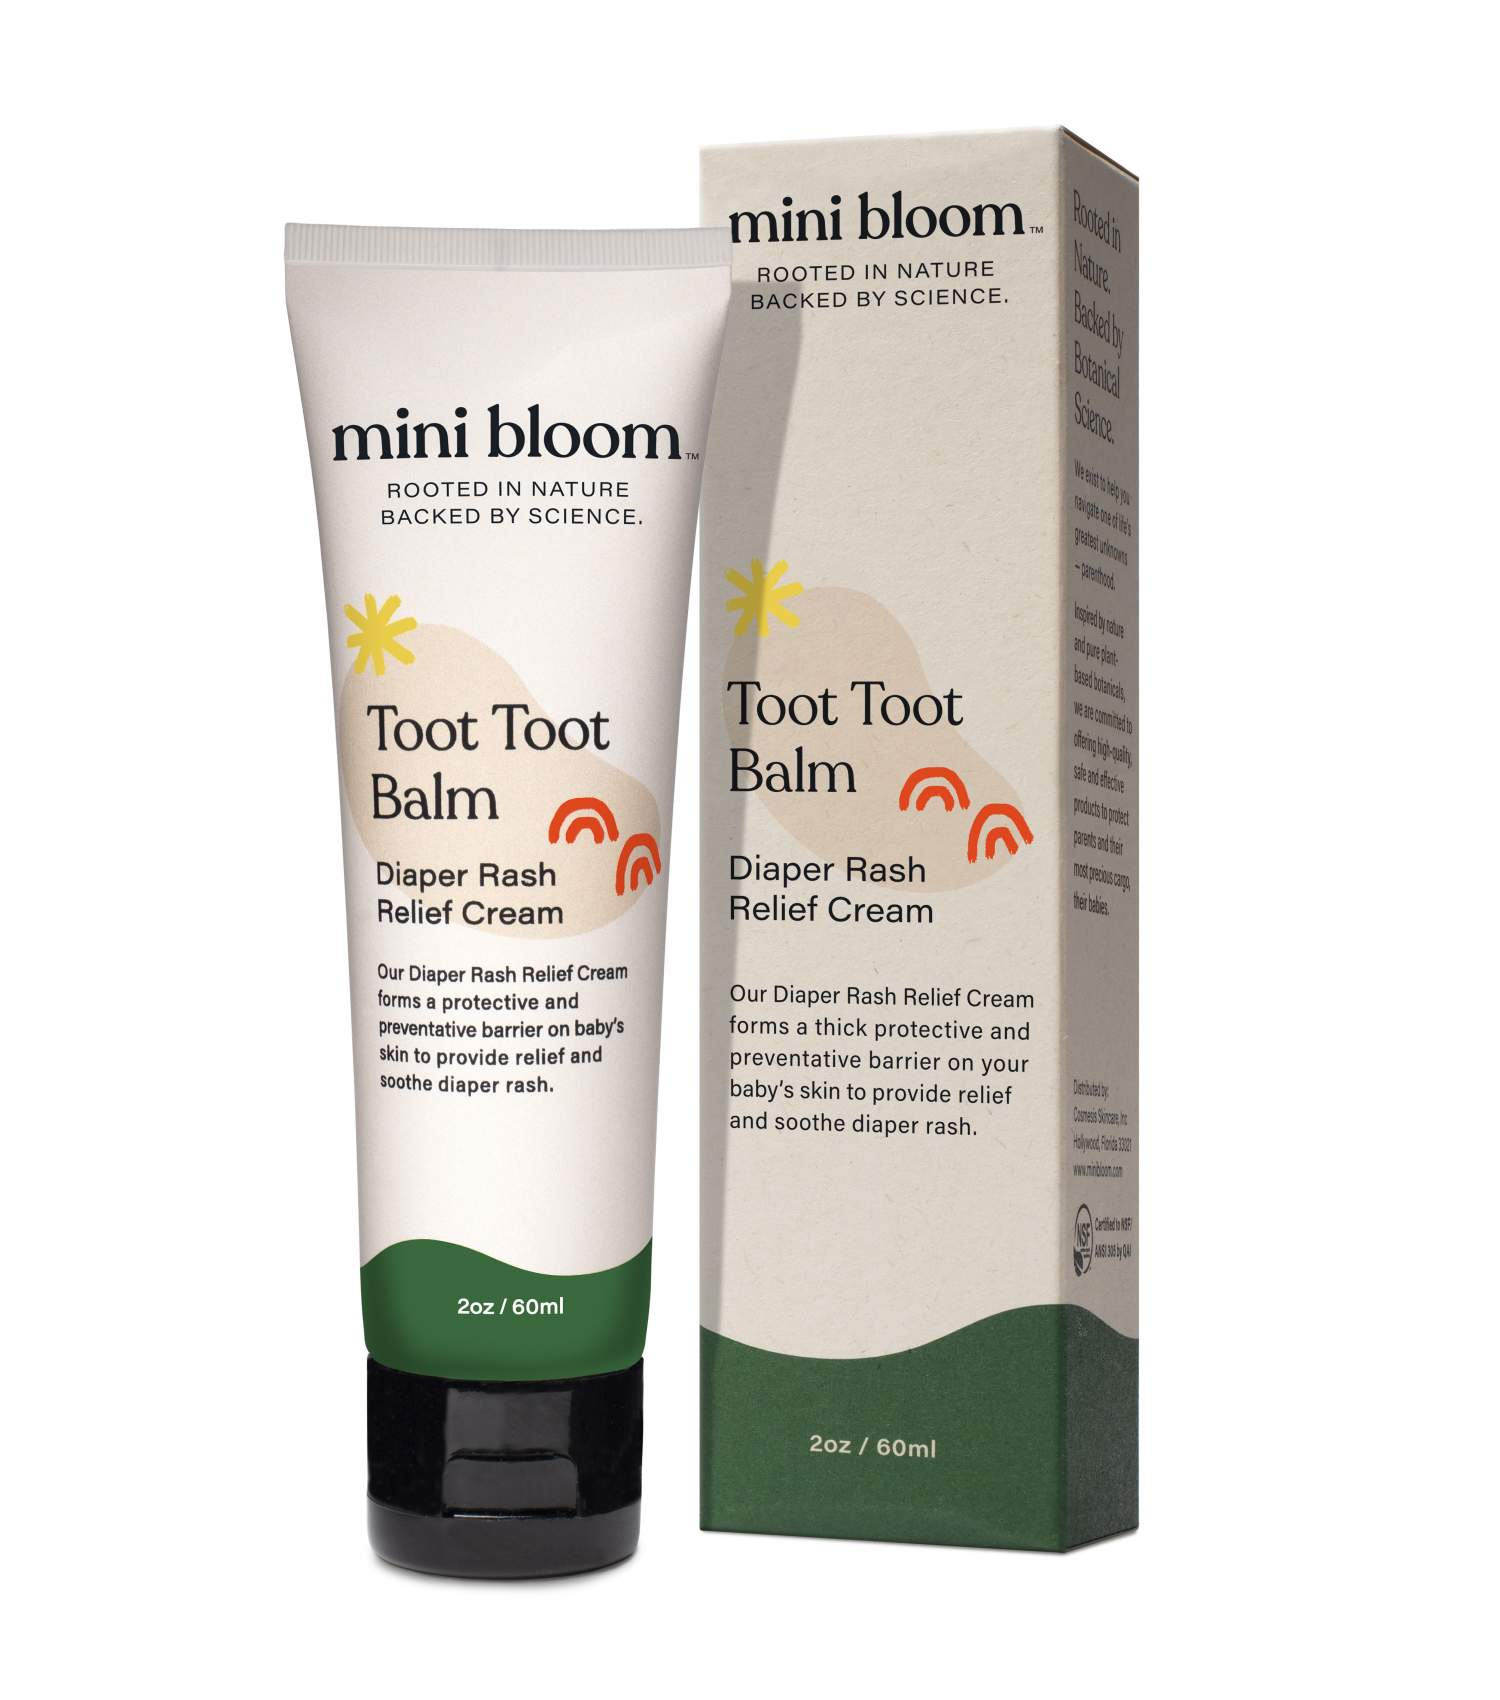 Mini Bloom TOOT TOOT BALM - Diaper Rash Relief Cream Mini Bloom TOOT TOOT BALM - Diaper Rash Relief Cream 1